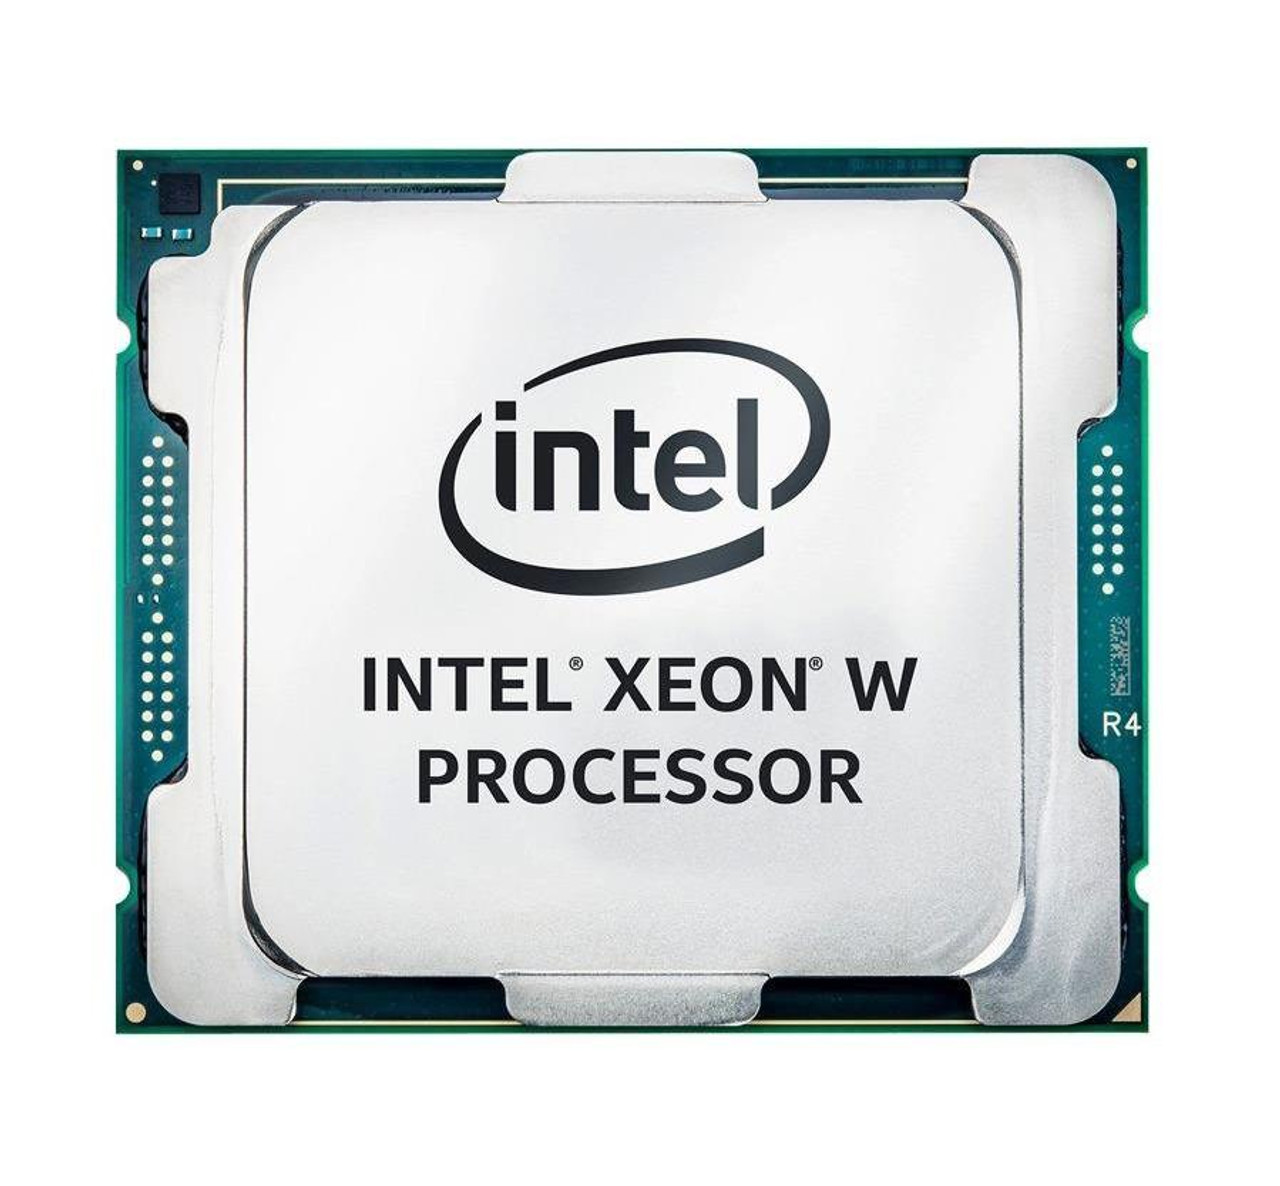 SuperMicro 2.50GHz 8.00GT/s 57MB L3 Cache Socket FCLGA4189 Intel Xeon W-3375 38-Core Processor Upgrade